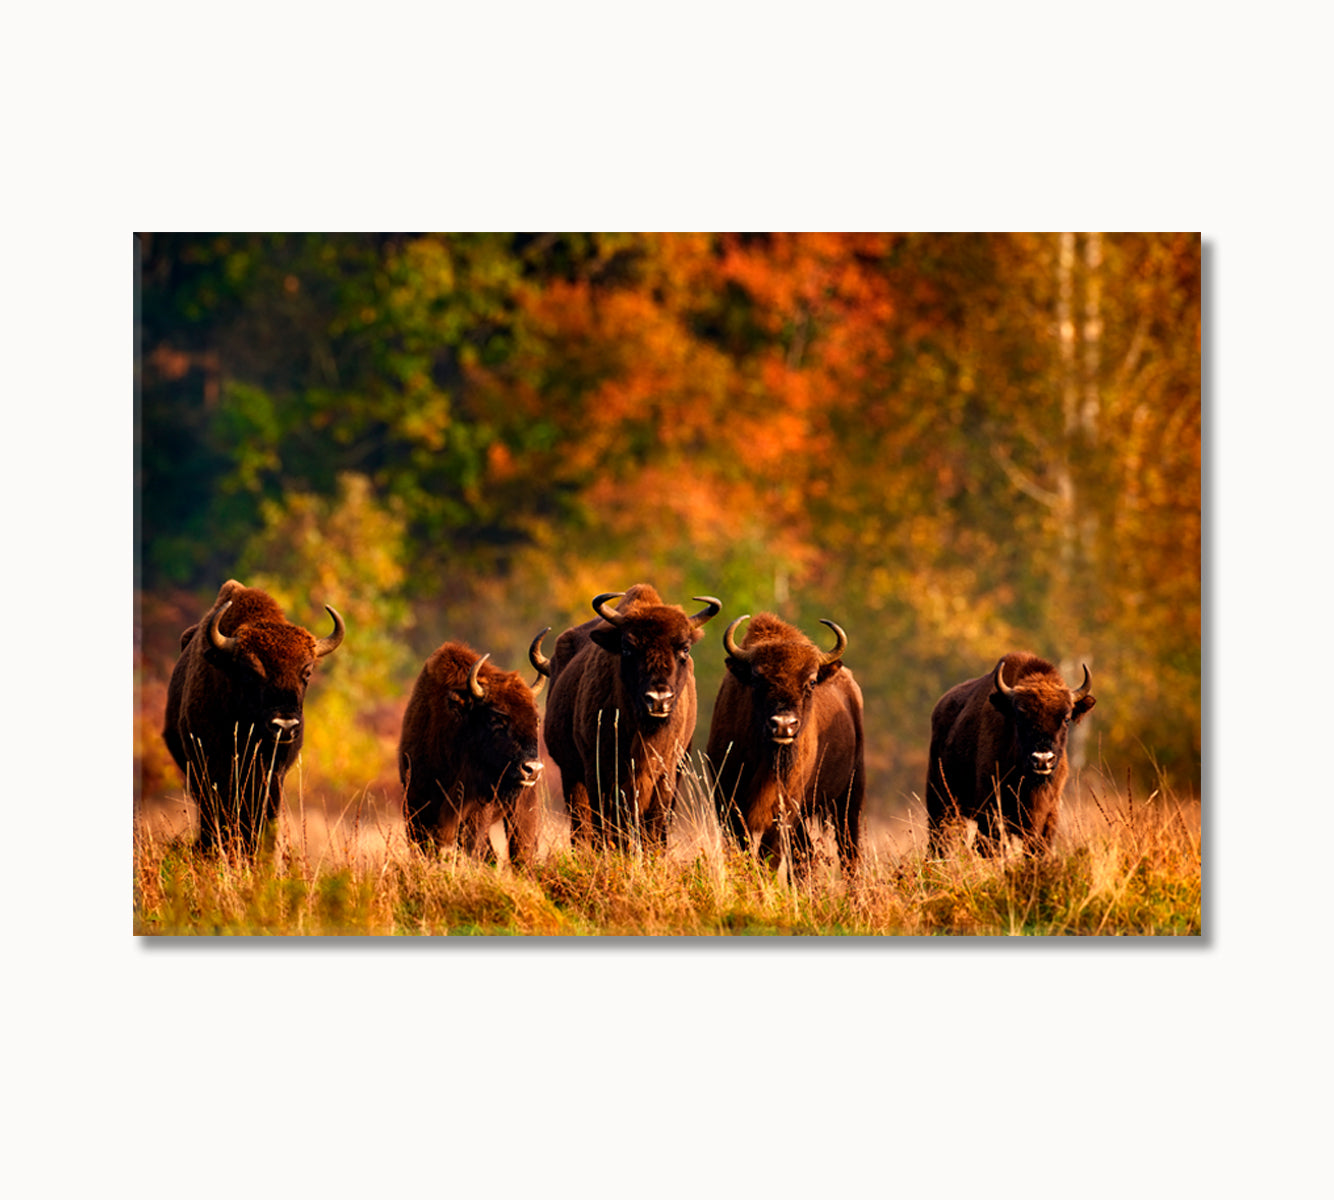 Bison Herd in the Autumn Forest Canvas Print-Canvas Print-CetArt-1 Panel-24x16 inches-CetArt